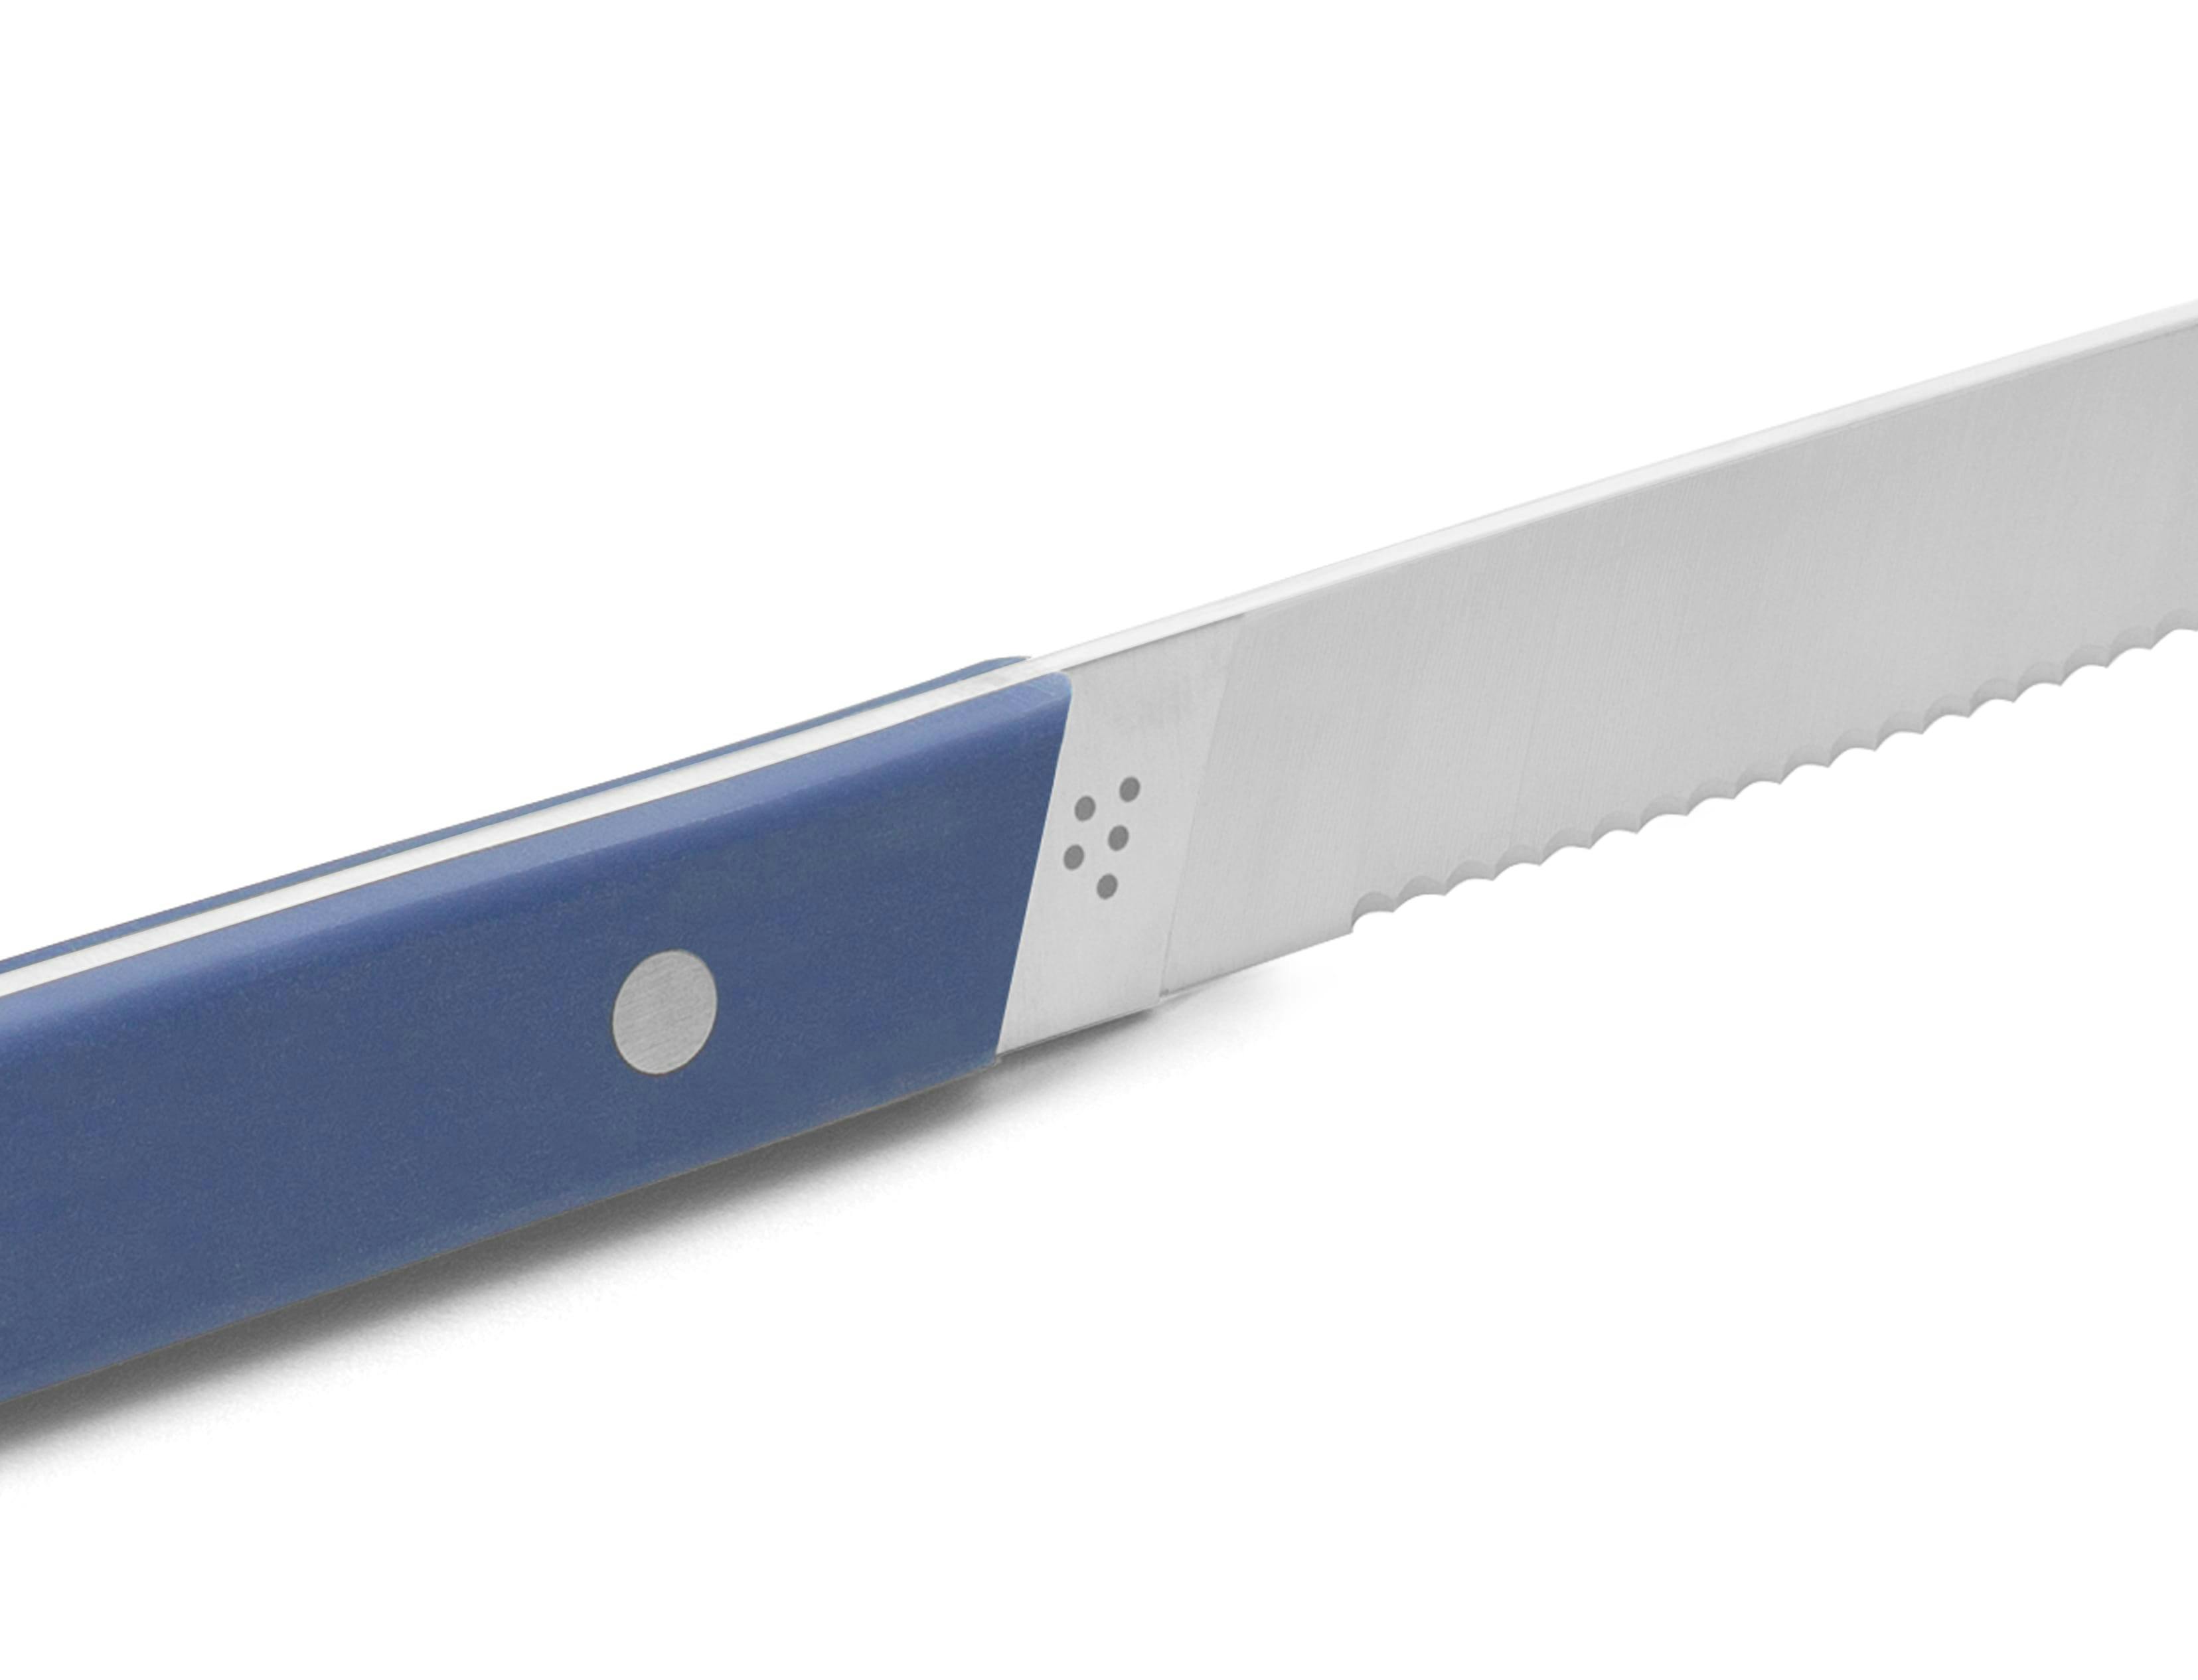 Misen Knife Set for Sale in Scottsdale, AZ - OfferUp